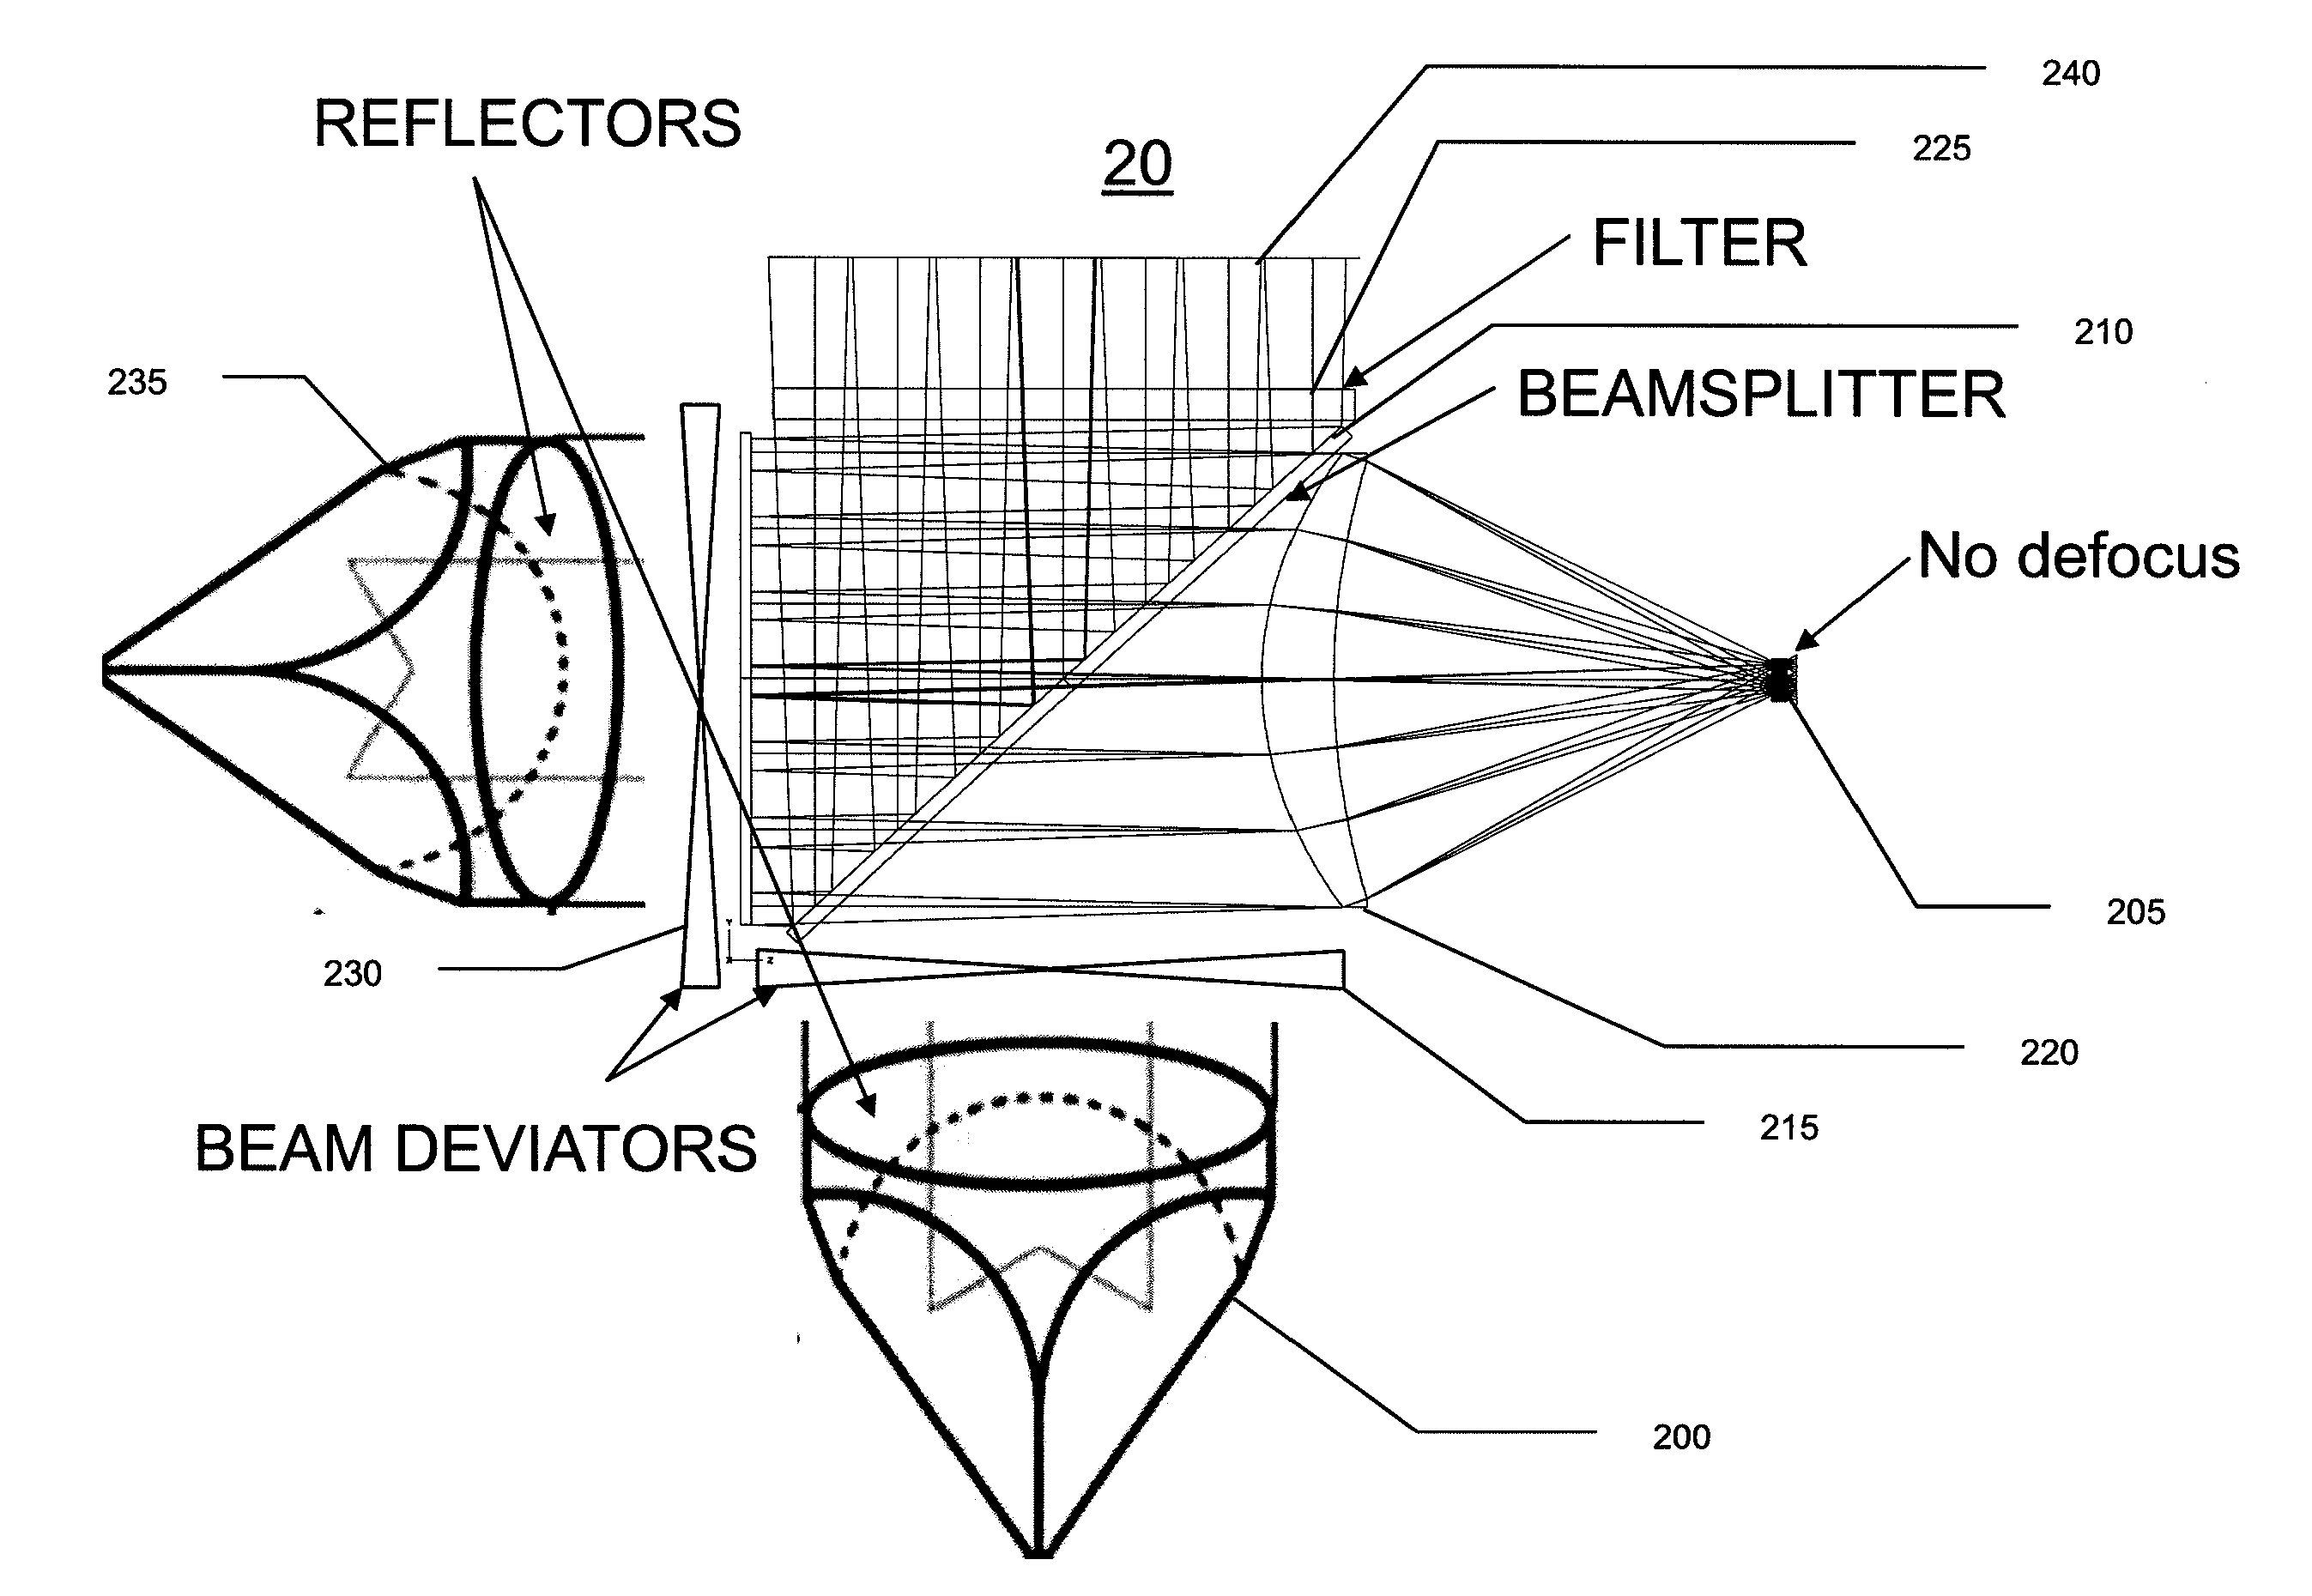 Optical arrangement for tracking detector